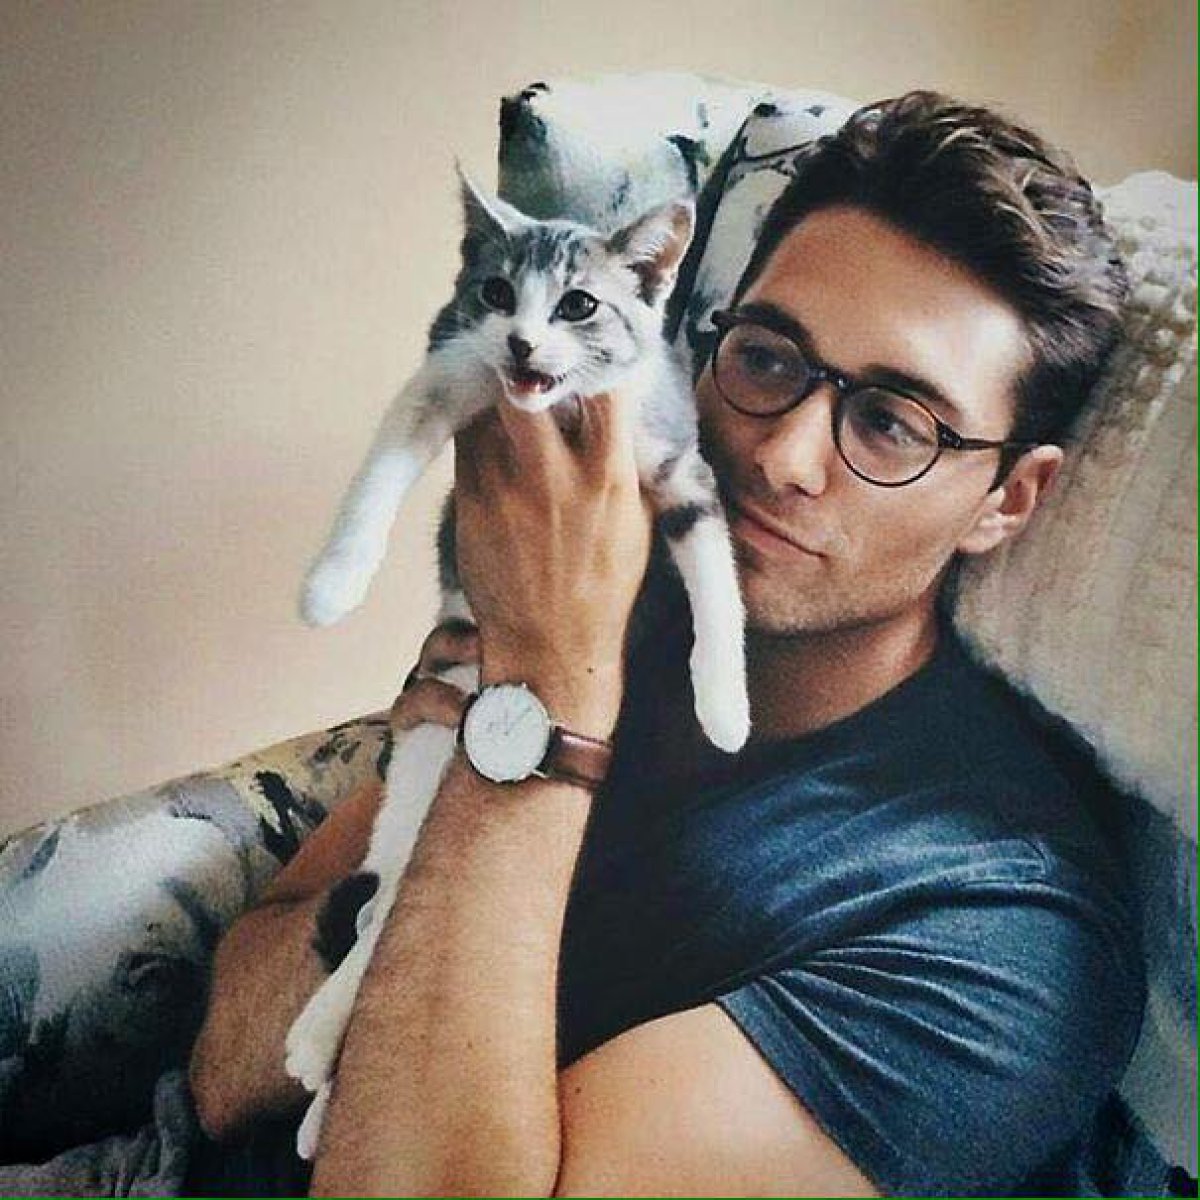 Hombre sexy + gatito = <3